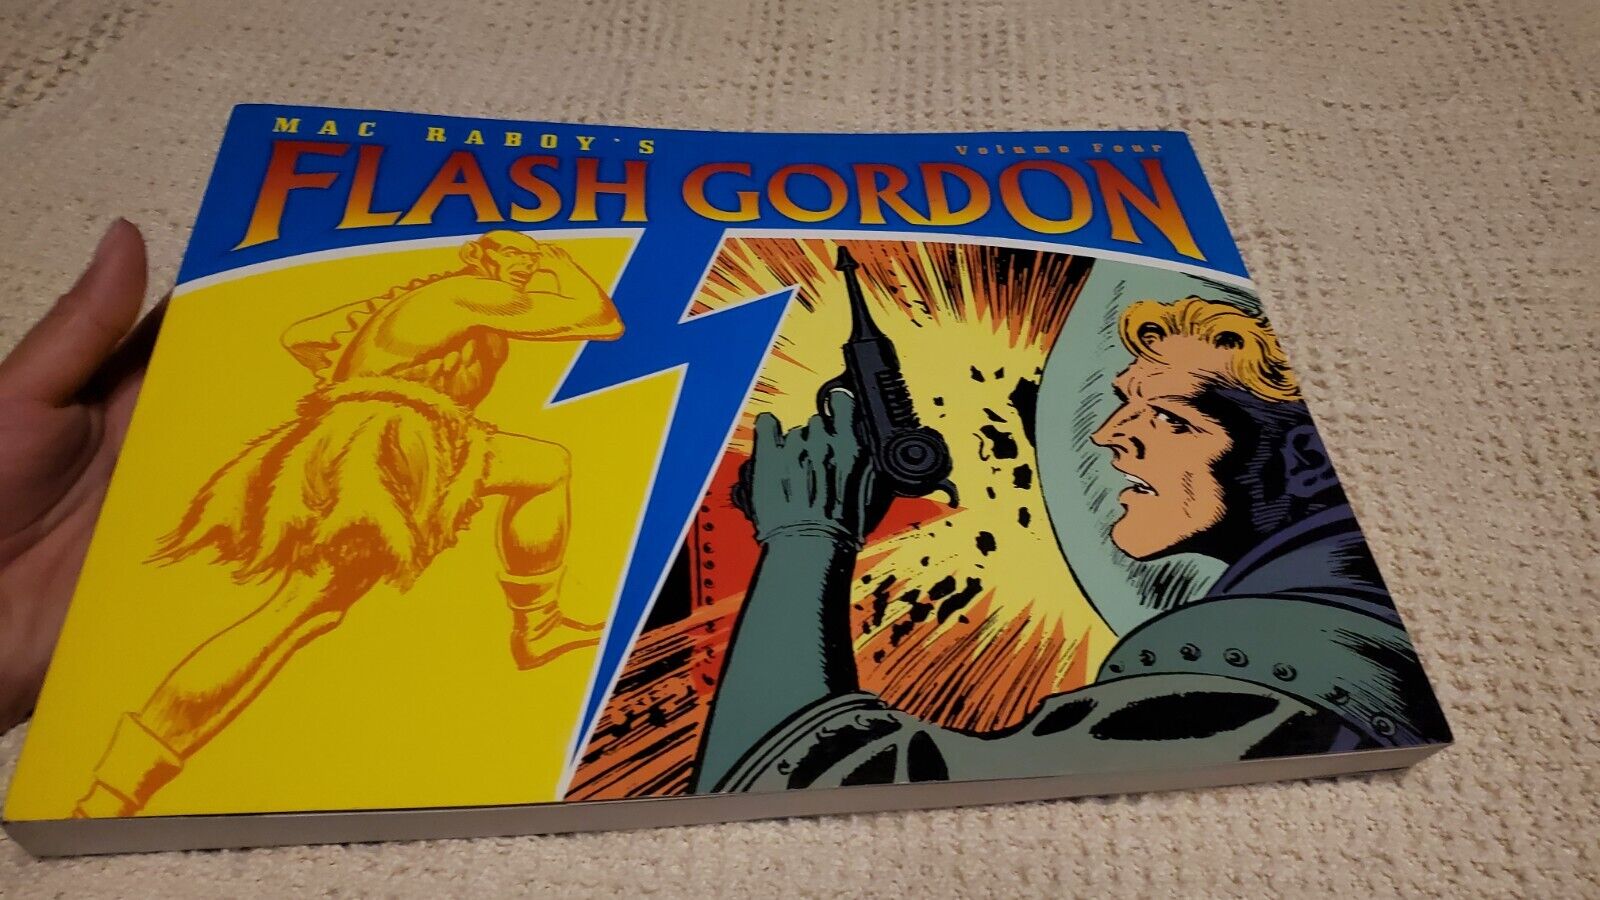 Mac Raboy's Flash Gordon #4, Dark Horse, tpb, wonderful art + writing on classic